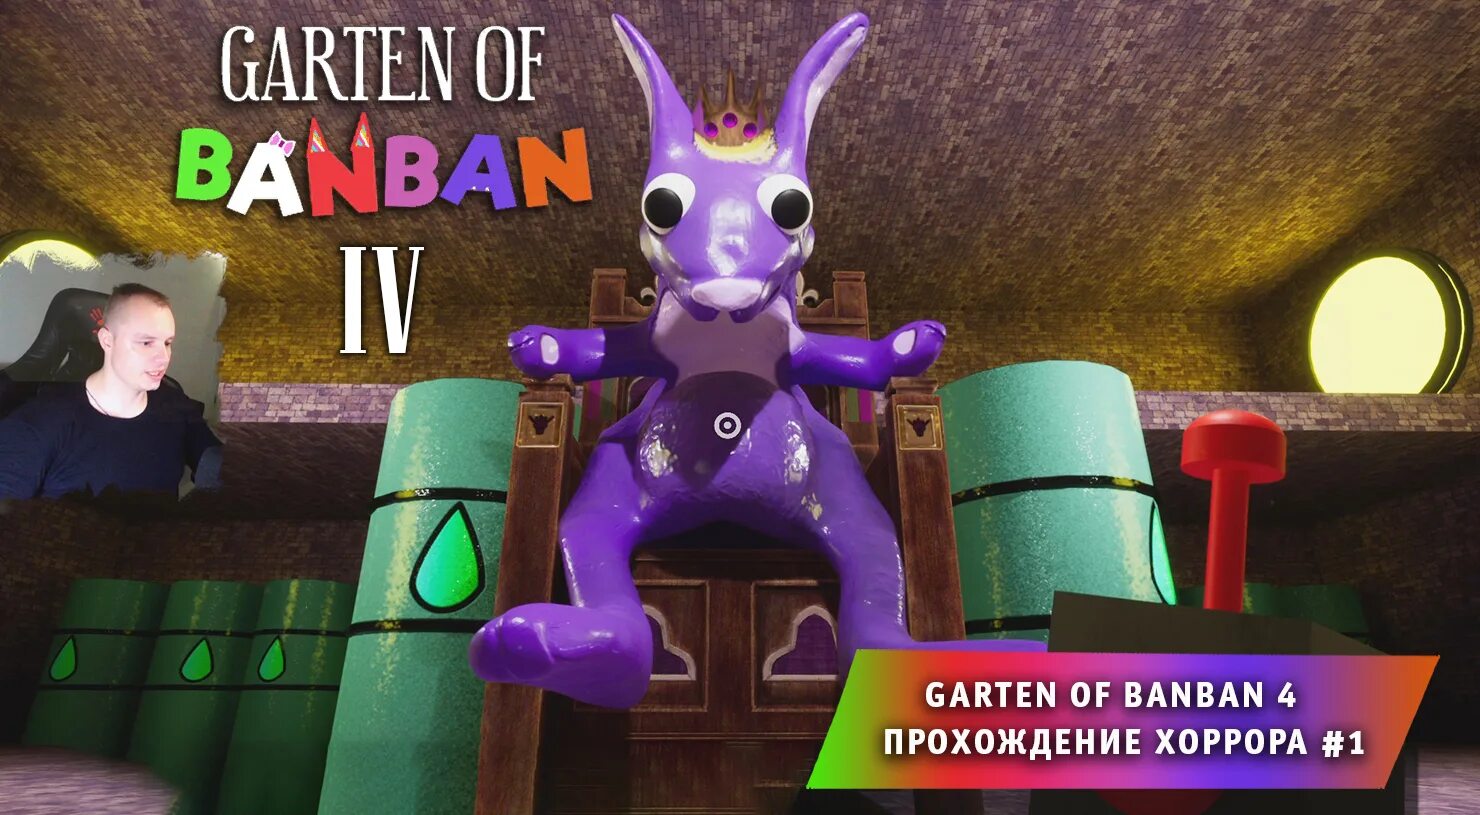 Бан бан игра 1. Банбан 4. Garden of ban ban 4. Гарден оф Банбан Банбан. Garden of Banban игра.